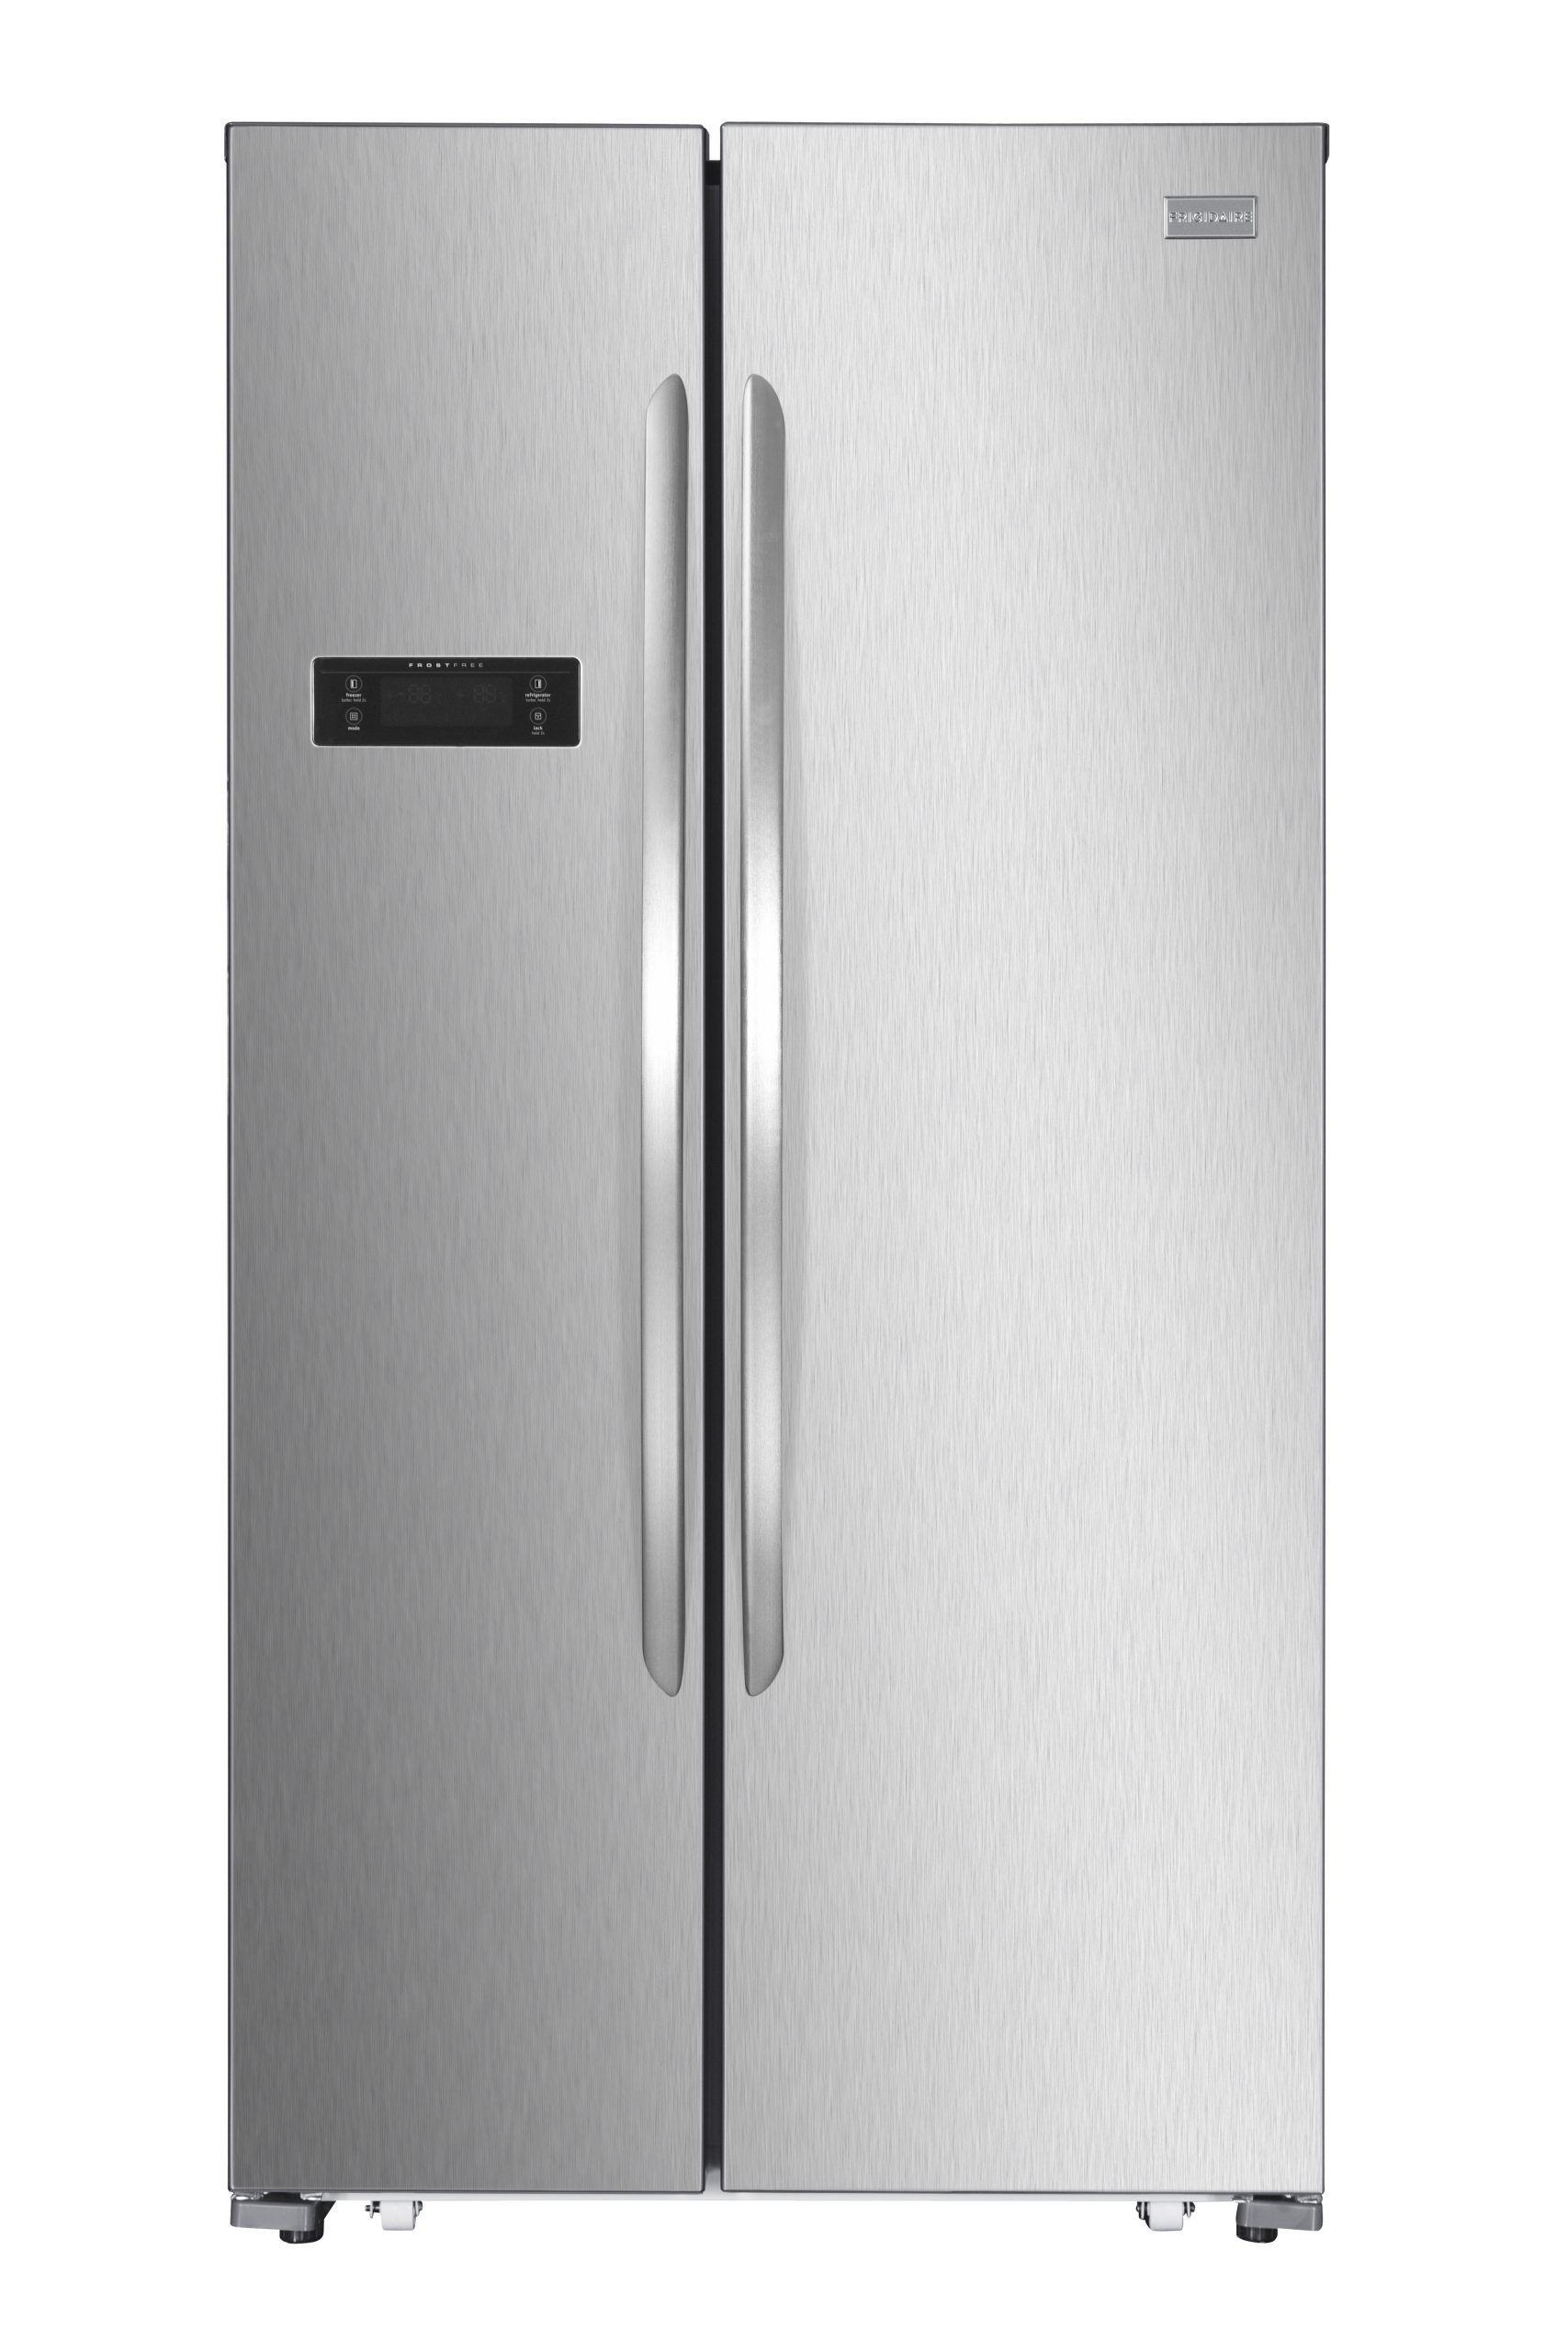 11+ Frigidaire fridge quick freeze ideas